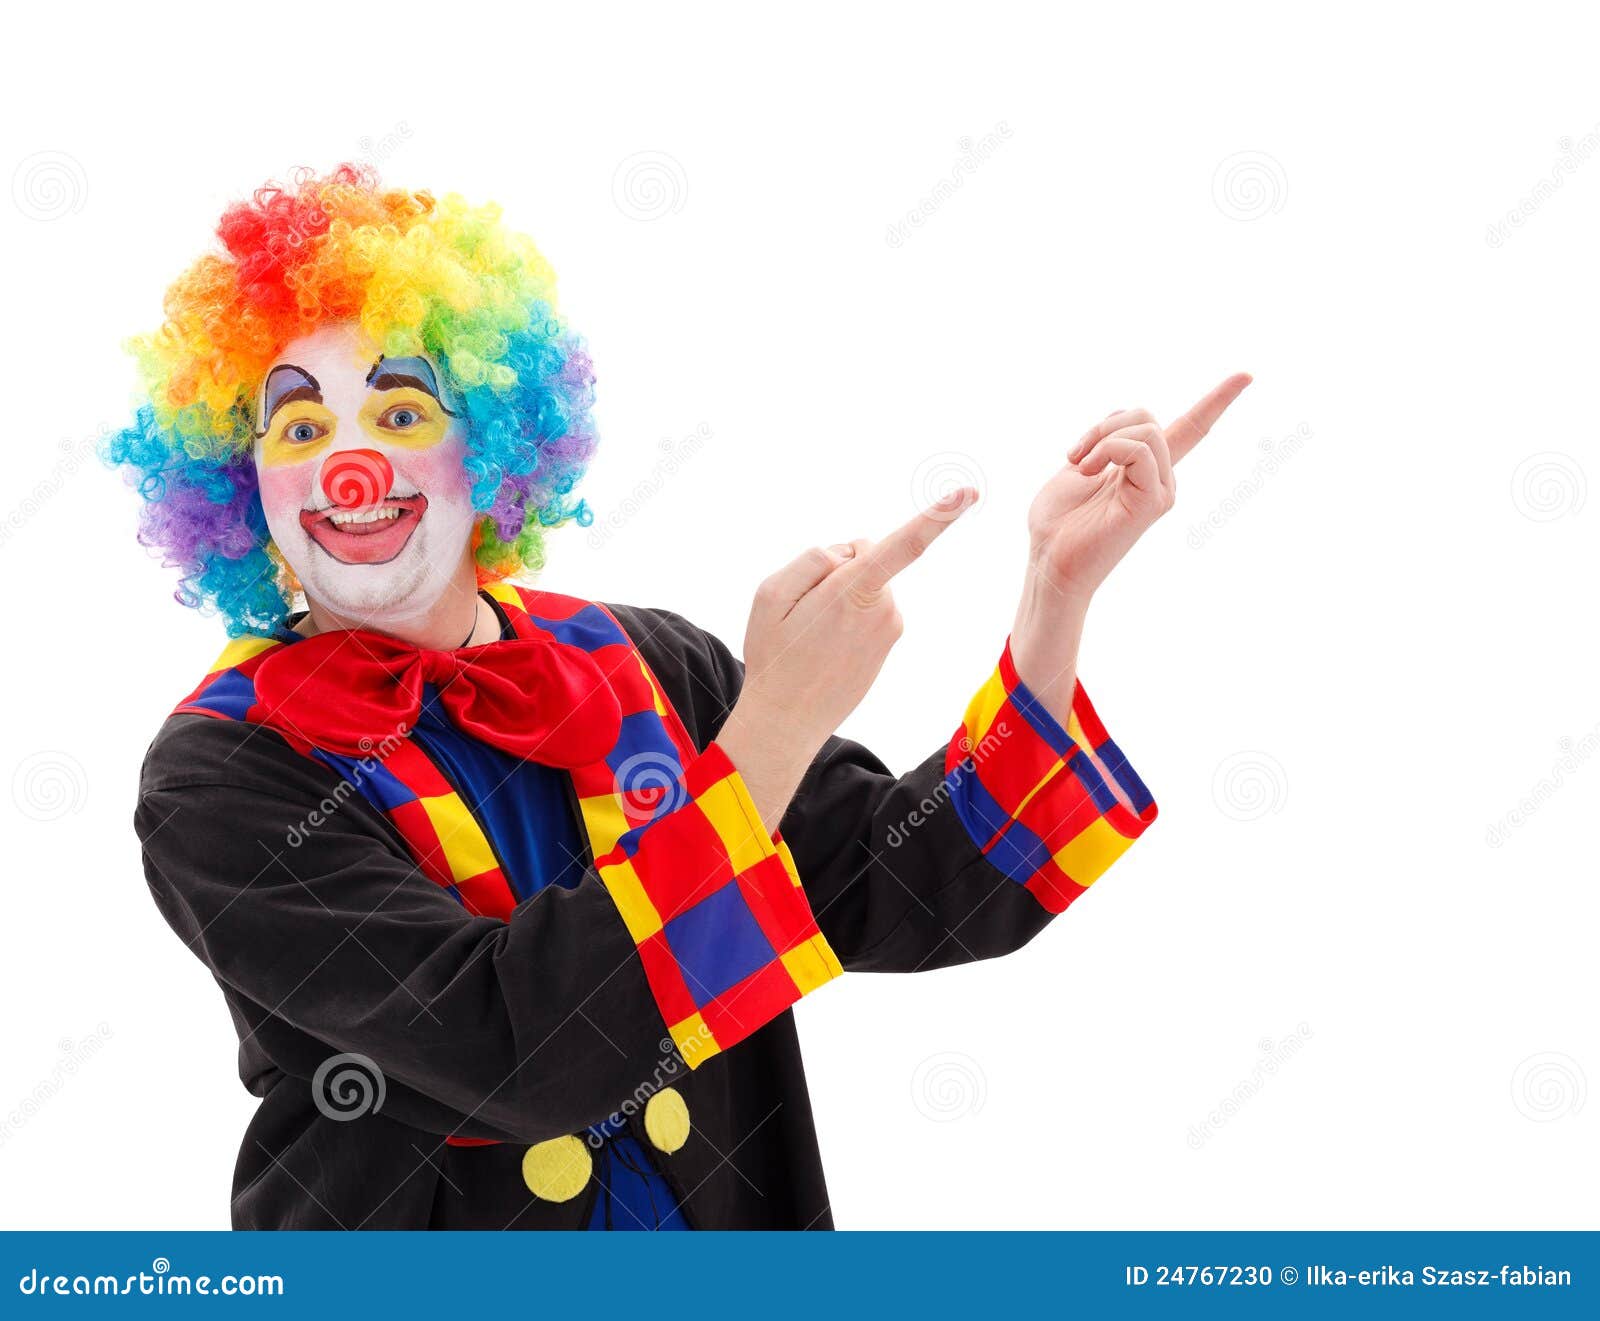 happy-clown-pointing-upward-24767230.jpg